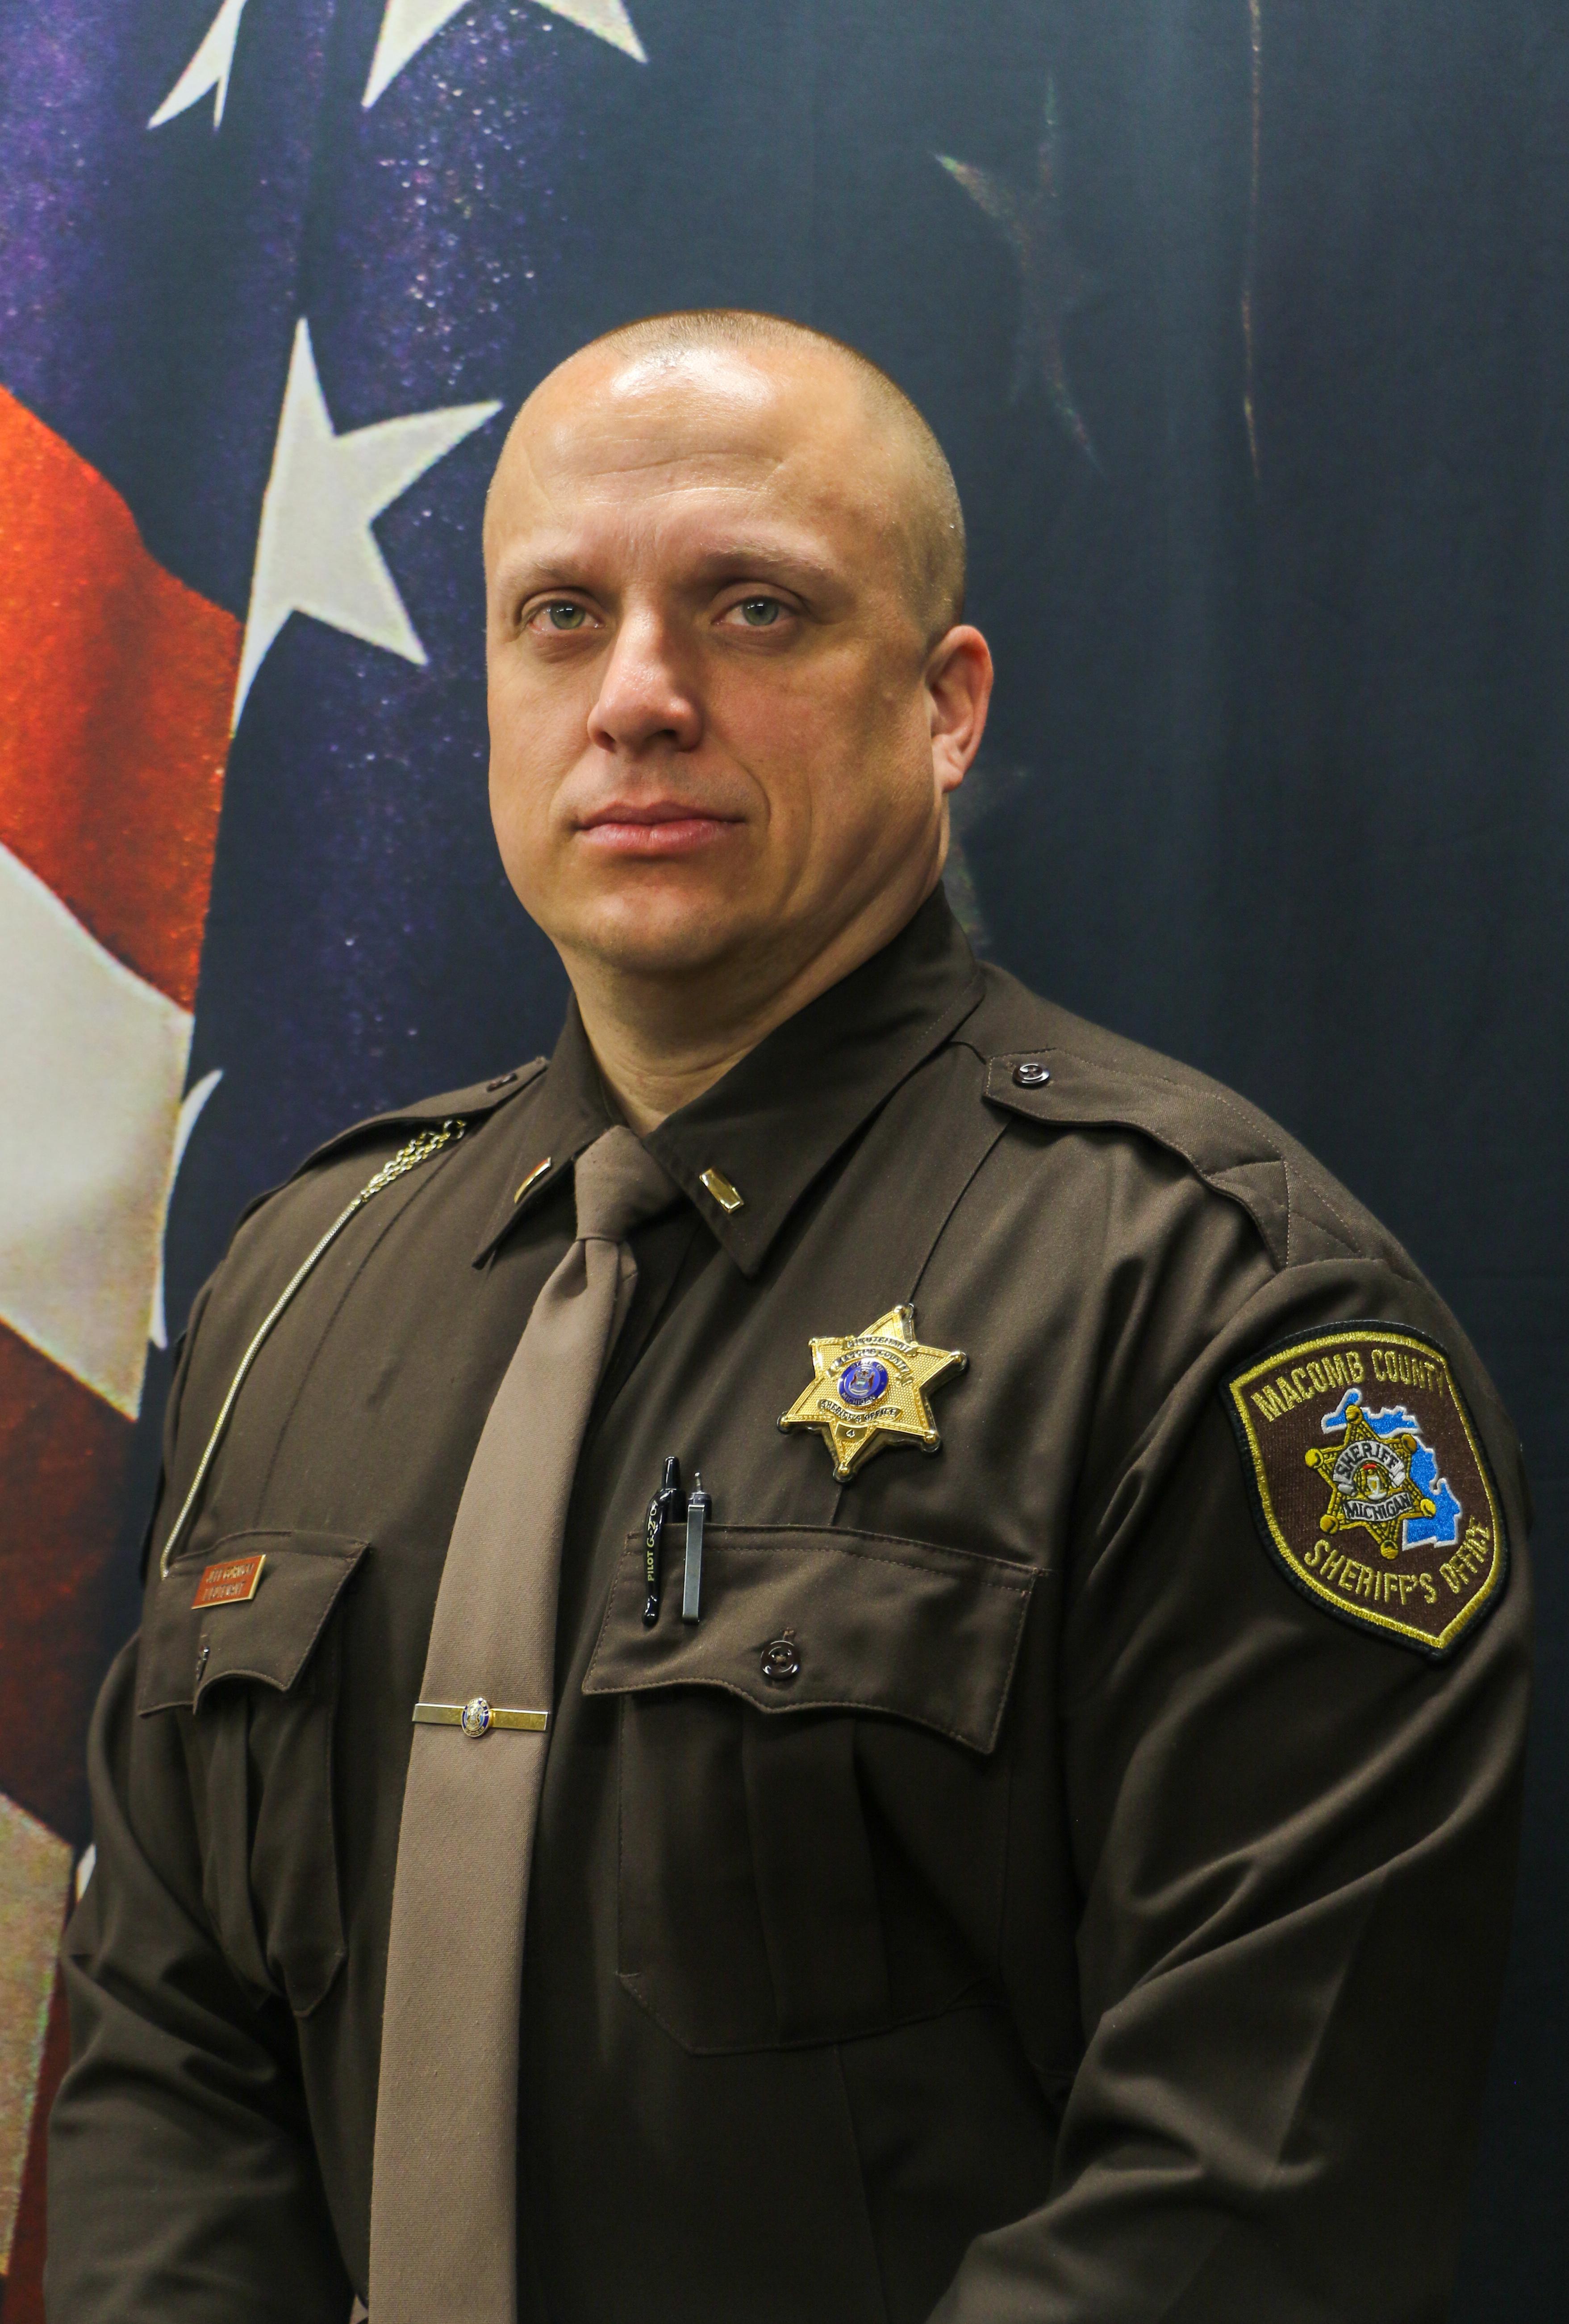 Sheriff - Lieutenant Gornicki